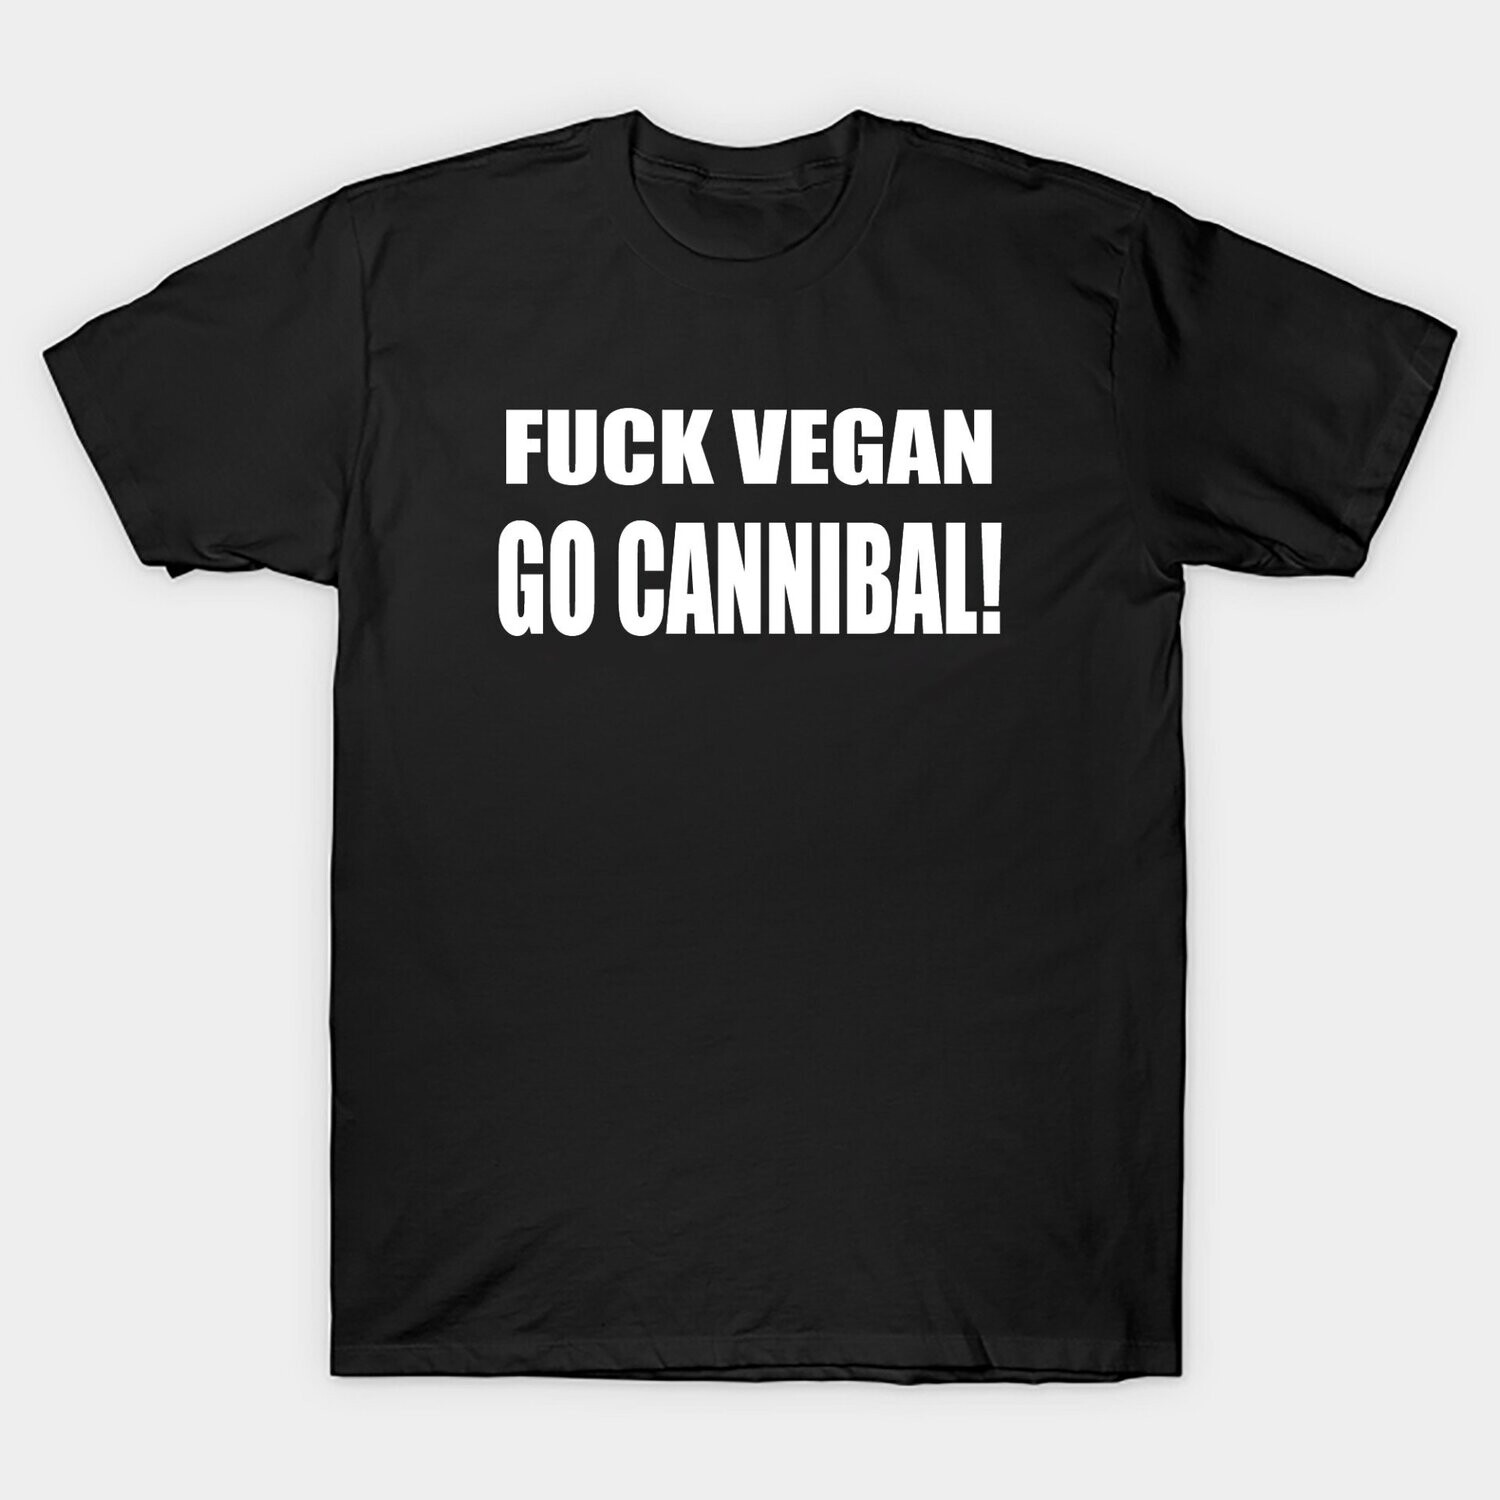 Go cannibal! t-shirt